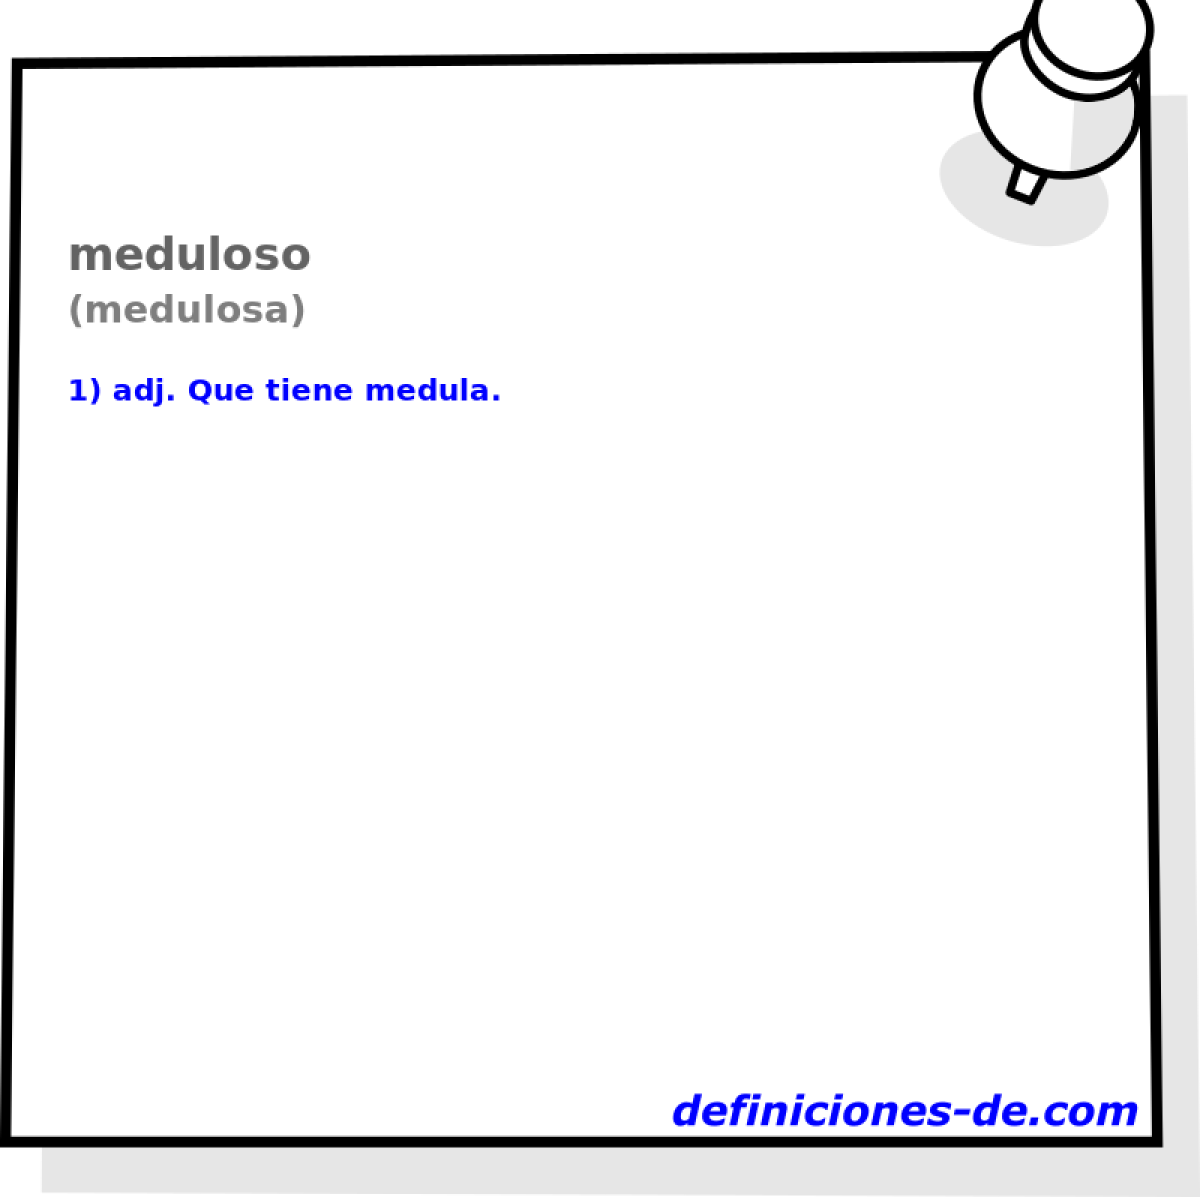 meduloso (medulosa)